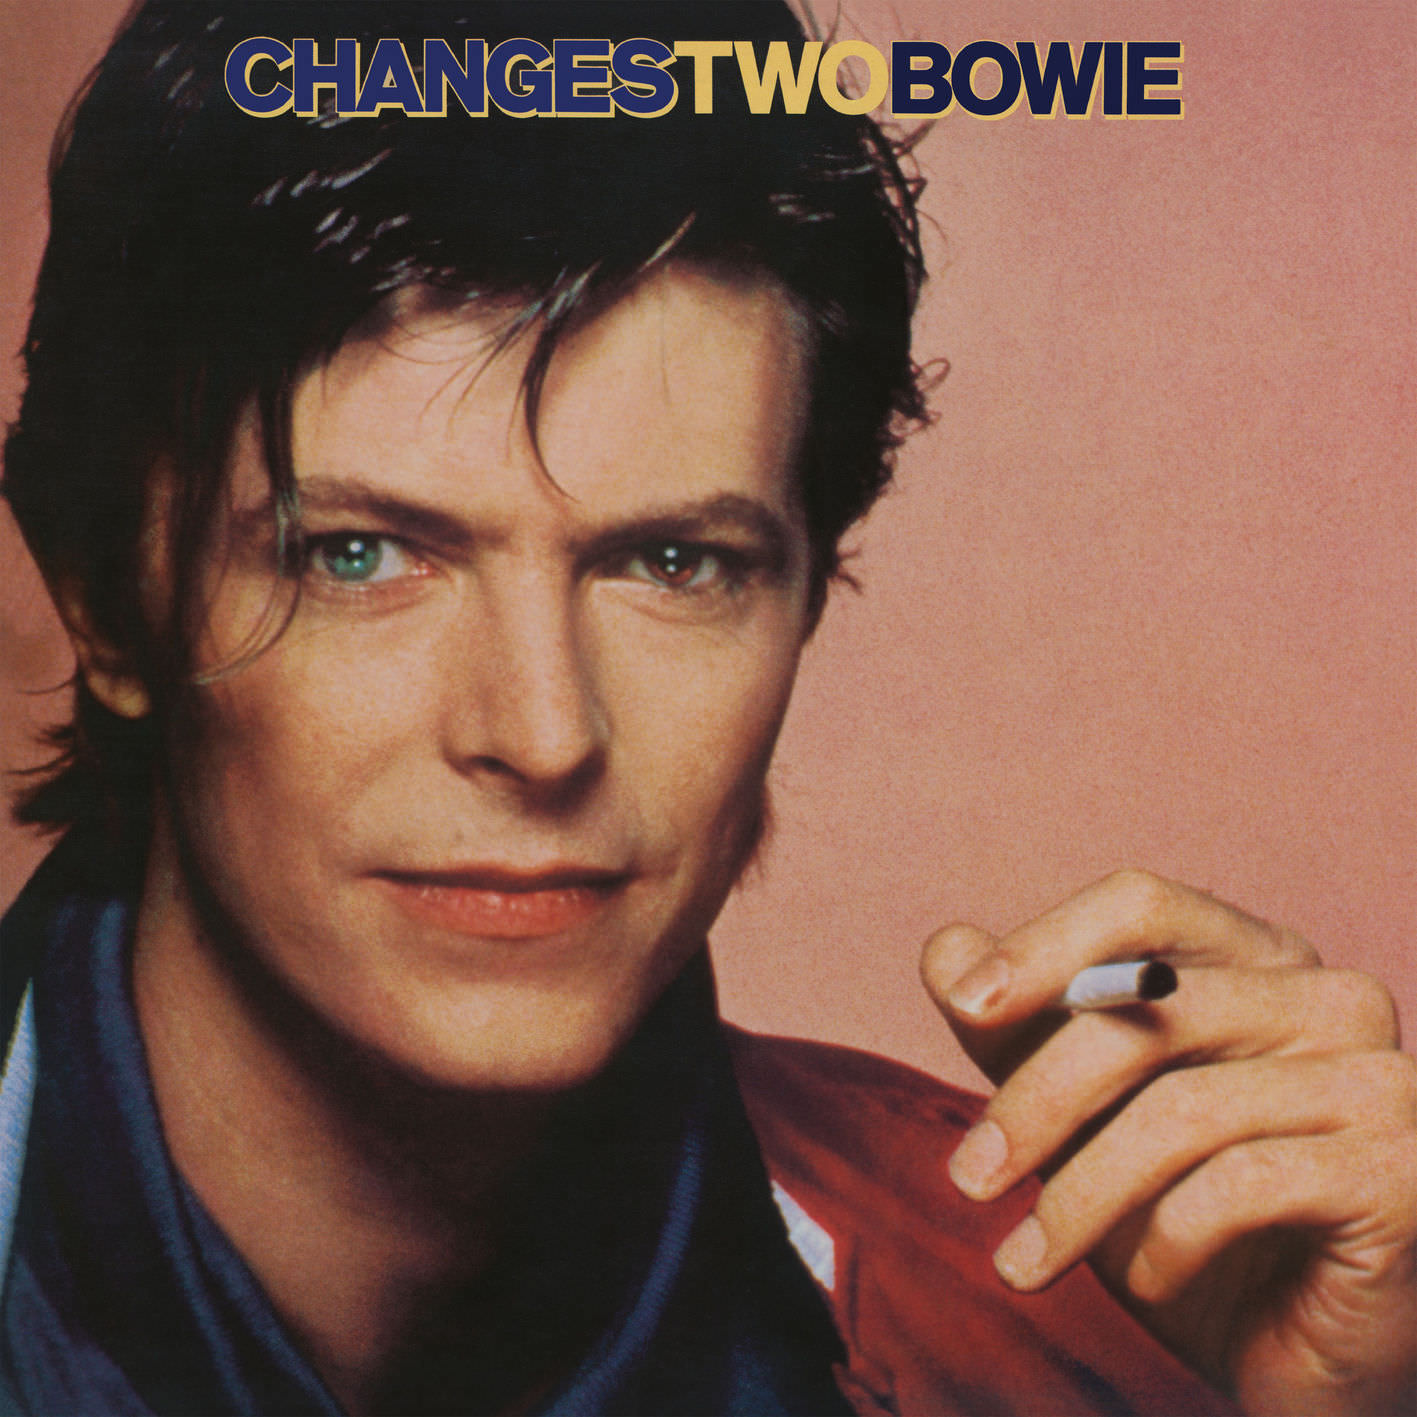 David Bowie - Changestwobowie (1981/2018) [HDTracks FLAC 24bit/192kHz]